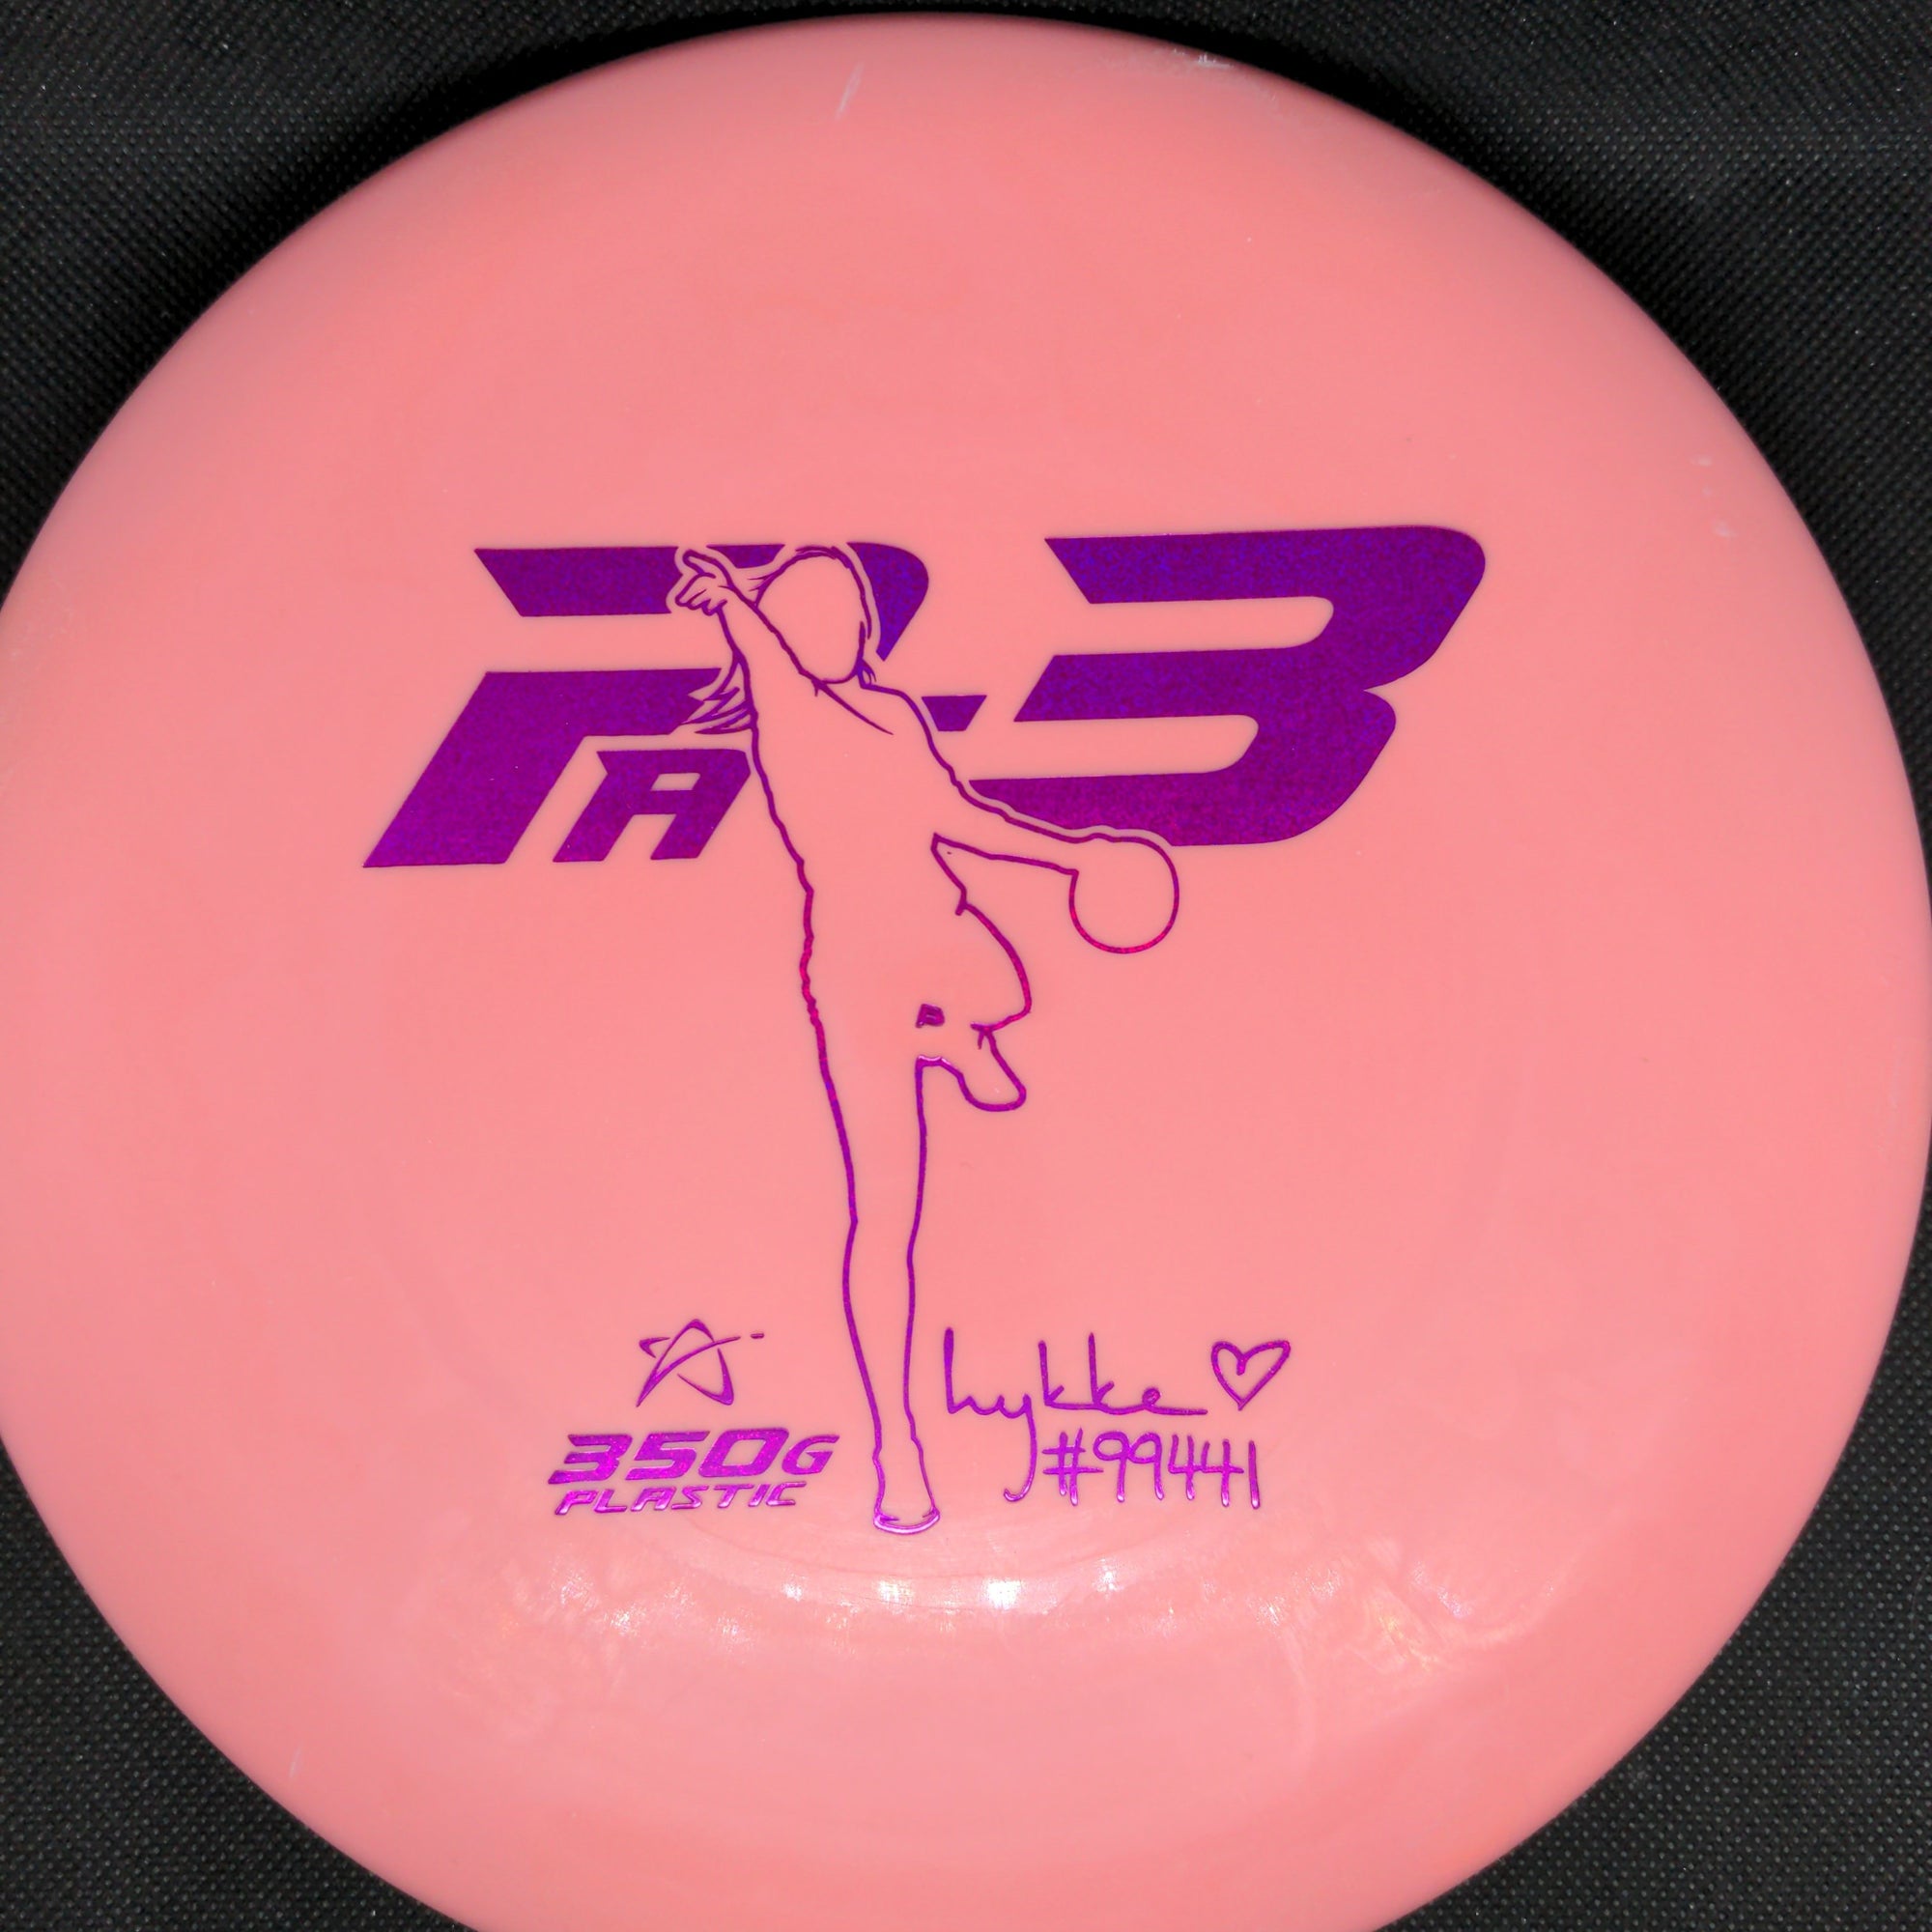 Prodigy Putter Pink/Orange Purple Glitter Stamp 174g PA3 350G Lykke Lorentzen 2021 Signature Series